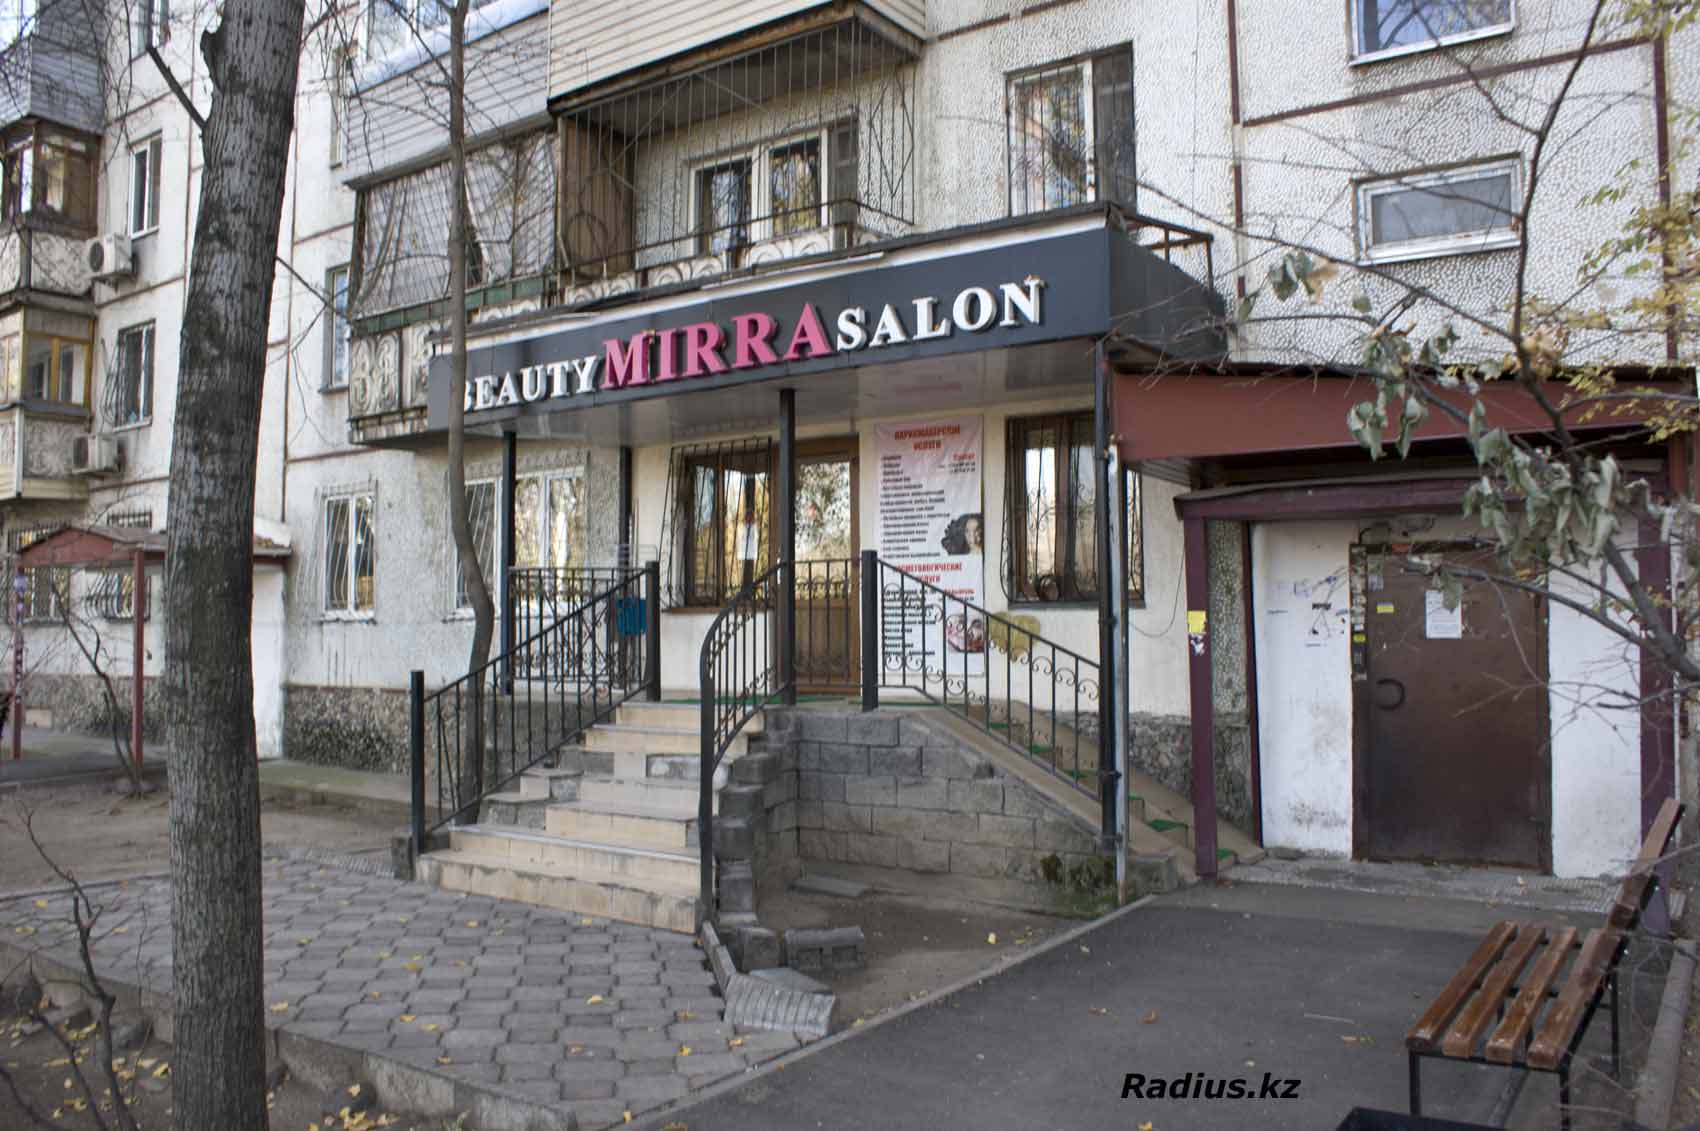 Beauty MIRRA Salon - очередной никакой салон красоты